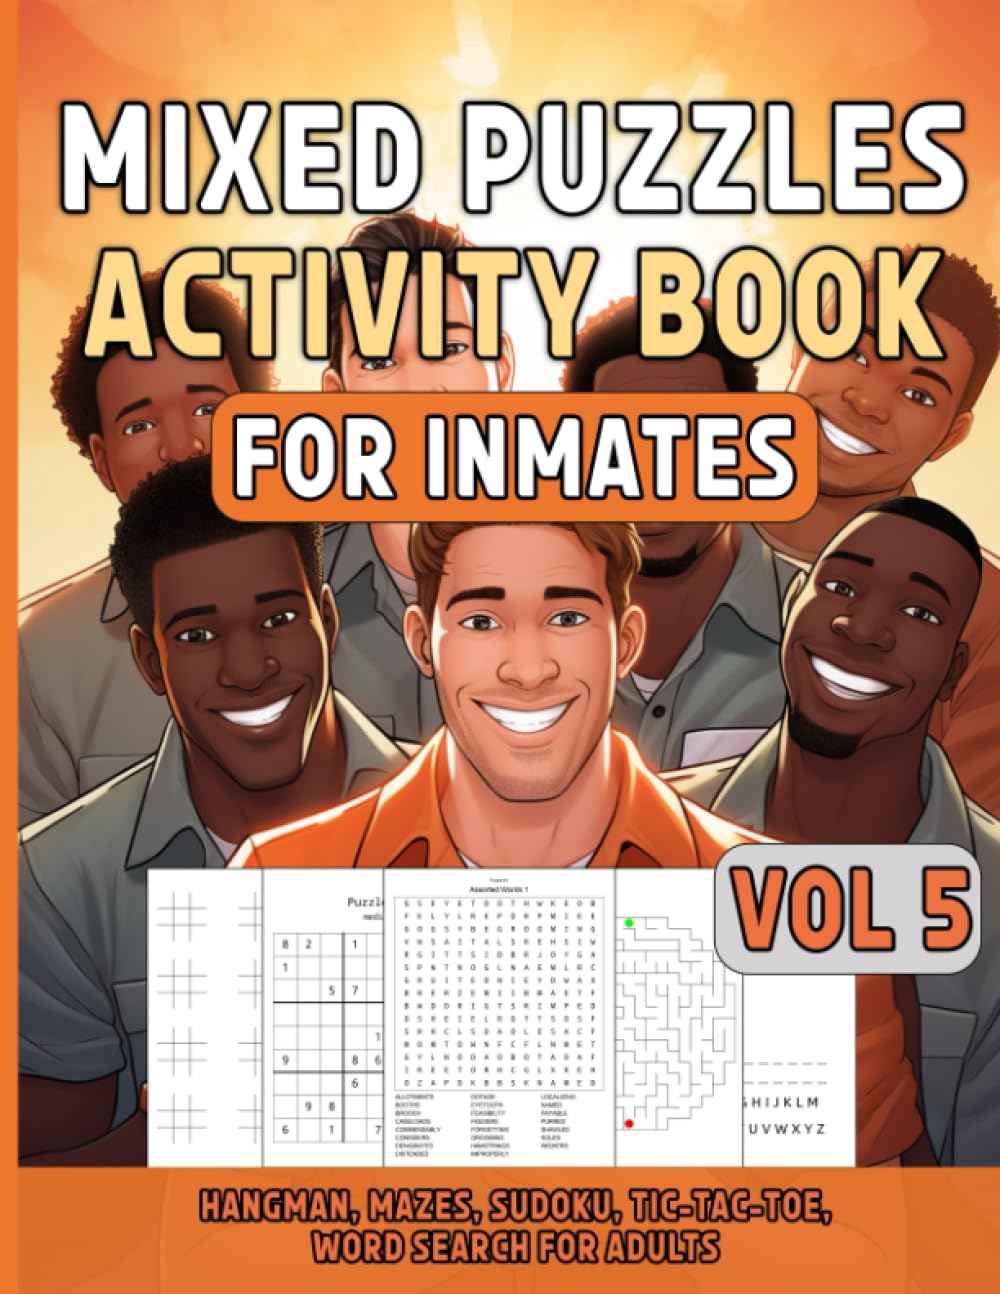 Mixed Puzzles Activity Book For Inmates Vol 5 - SureShot Books Publishing LLC